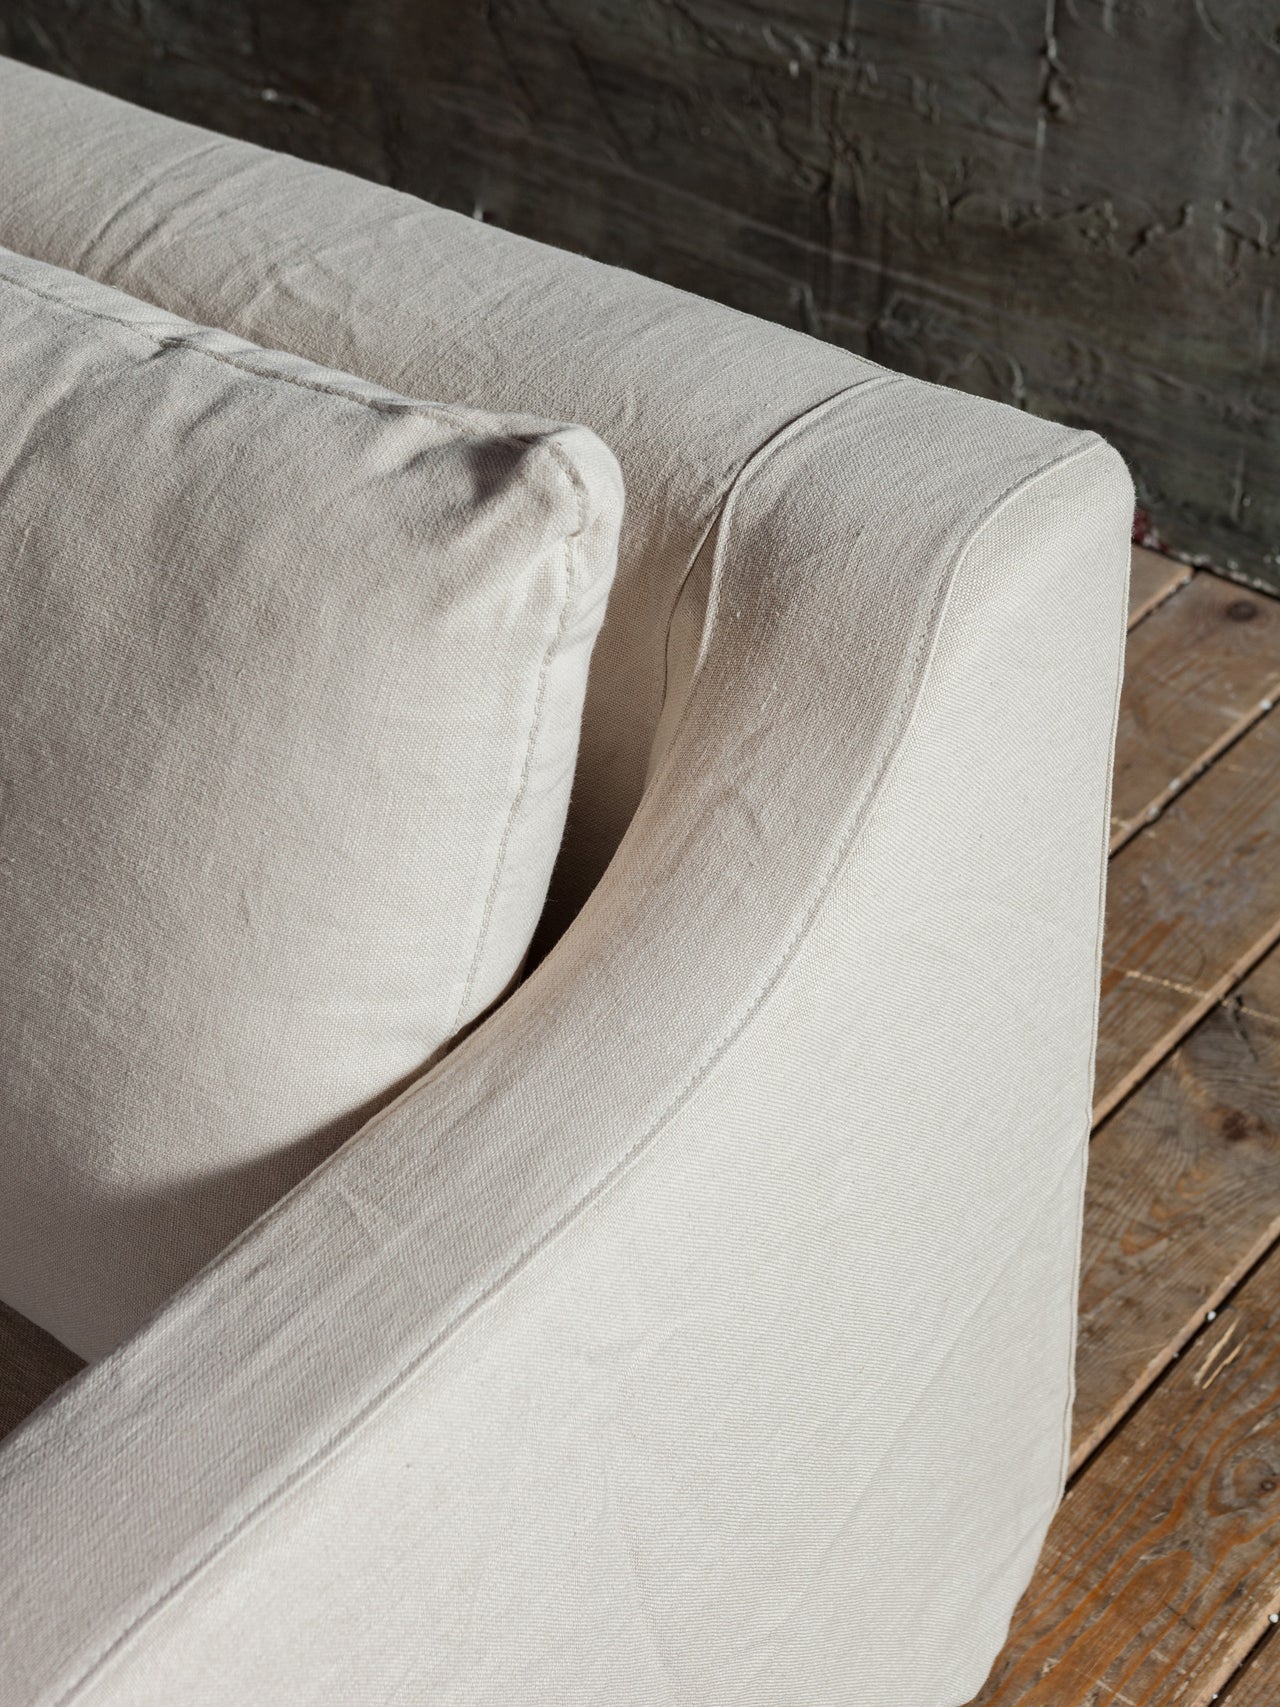 Linen Comporta sofa cover